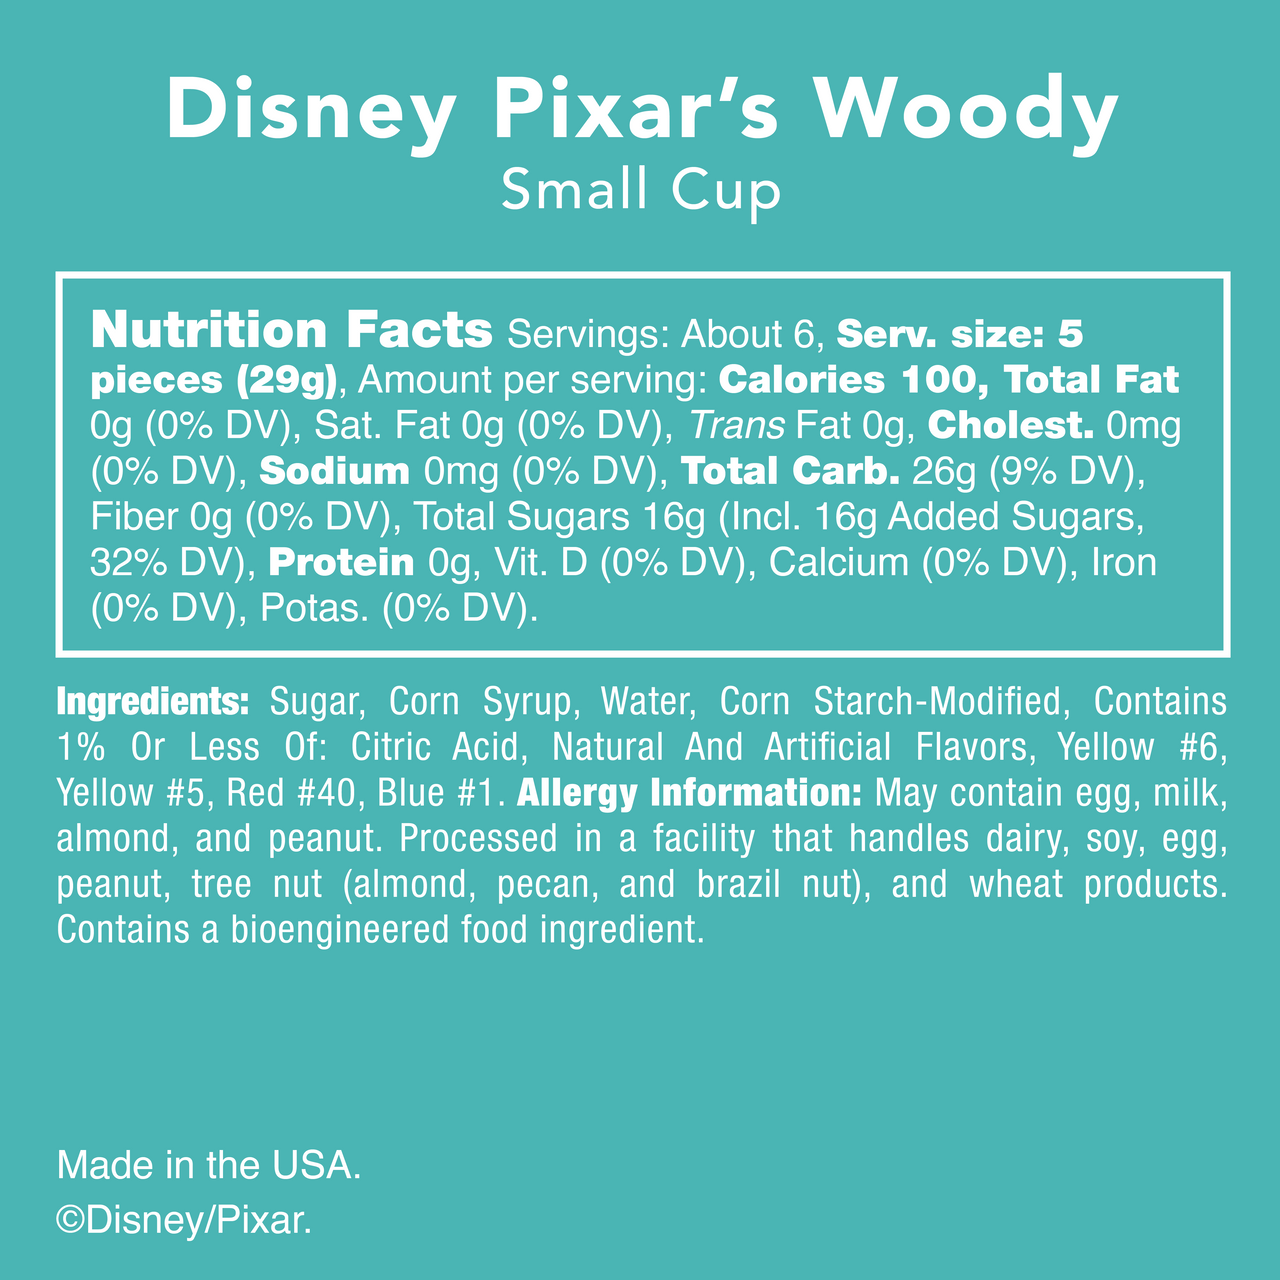 Candy Club Disney Pixar: Toy Story Woody